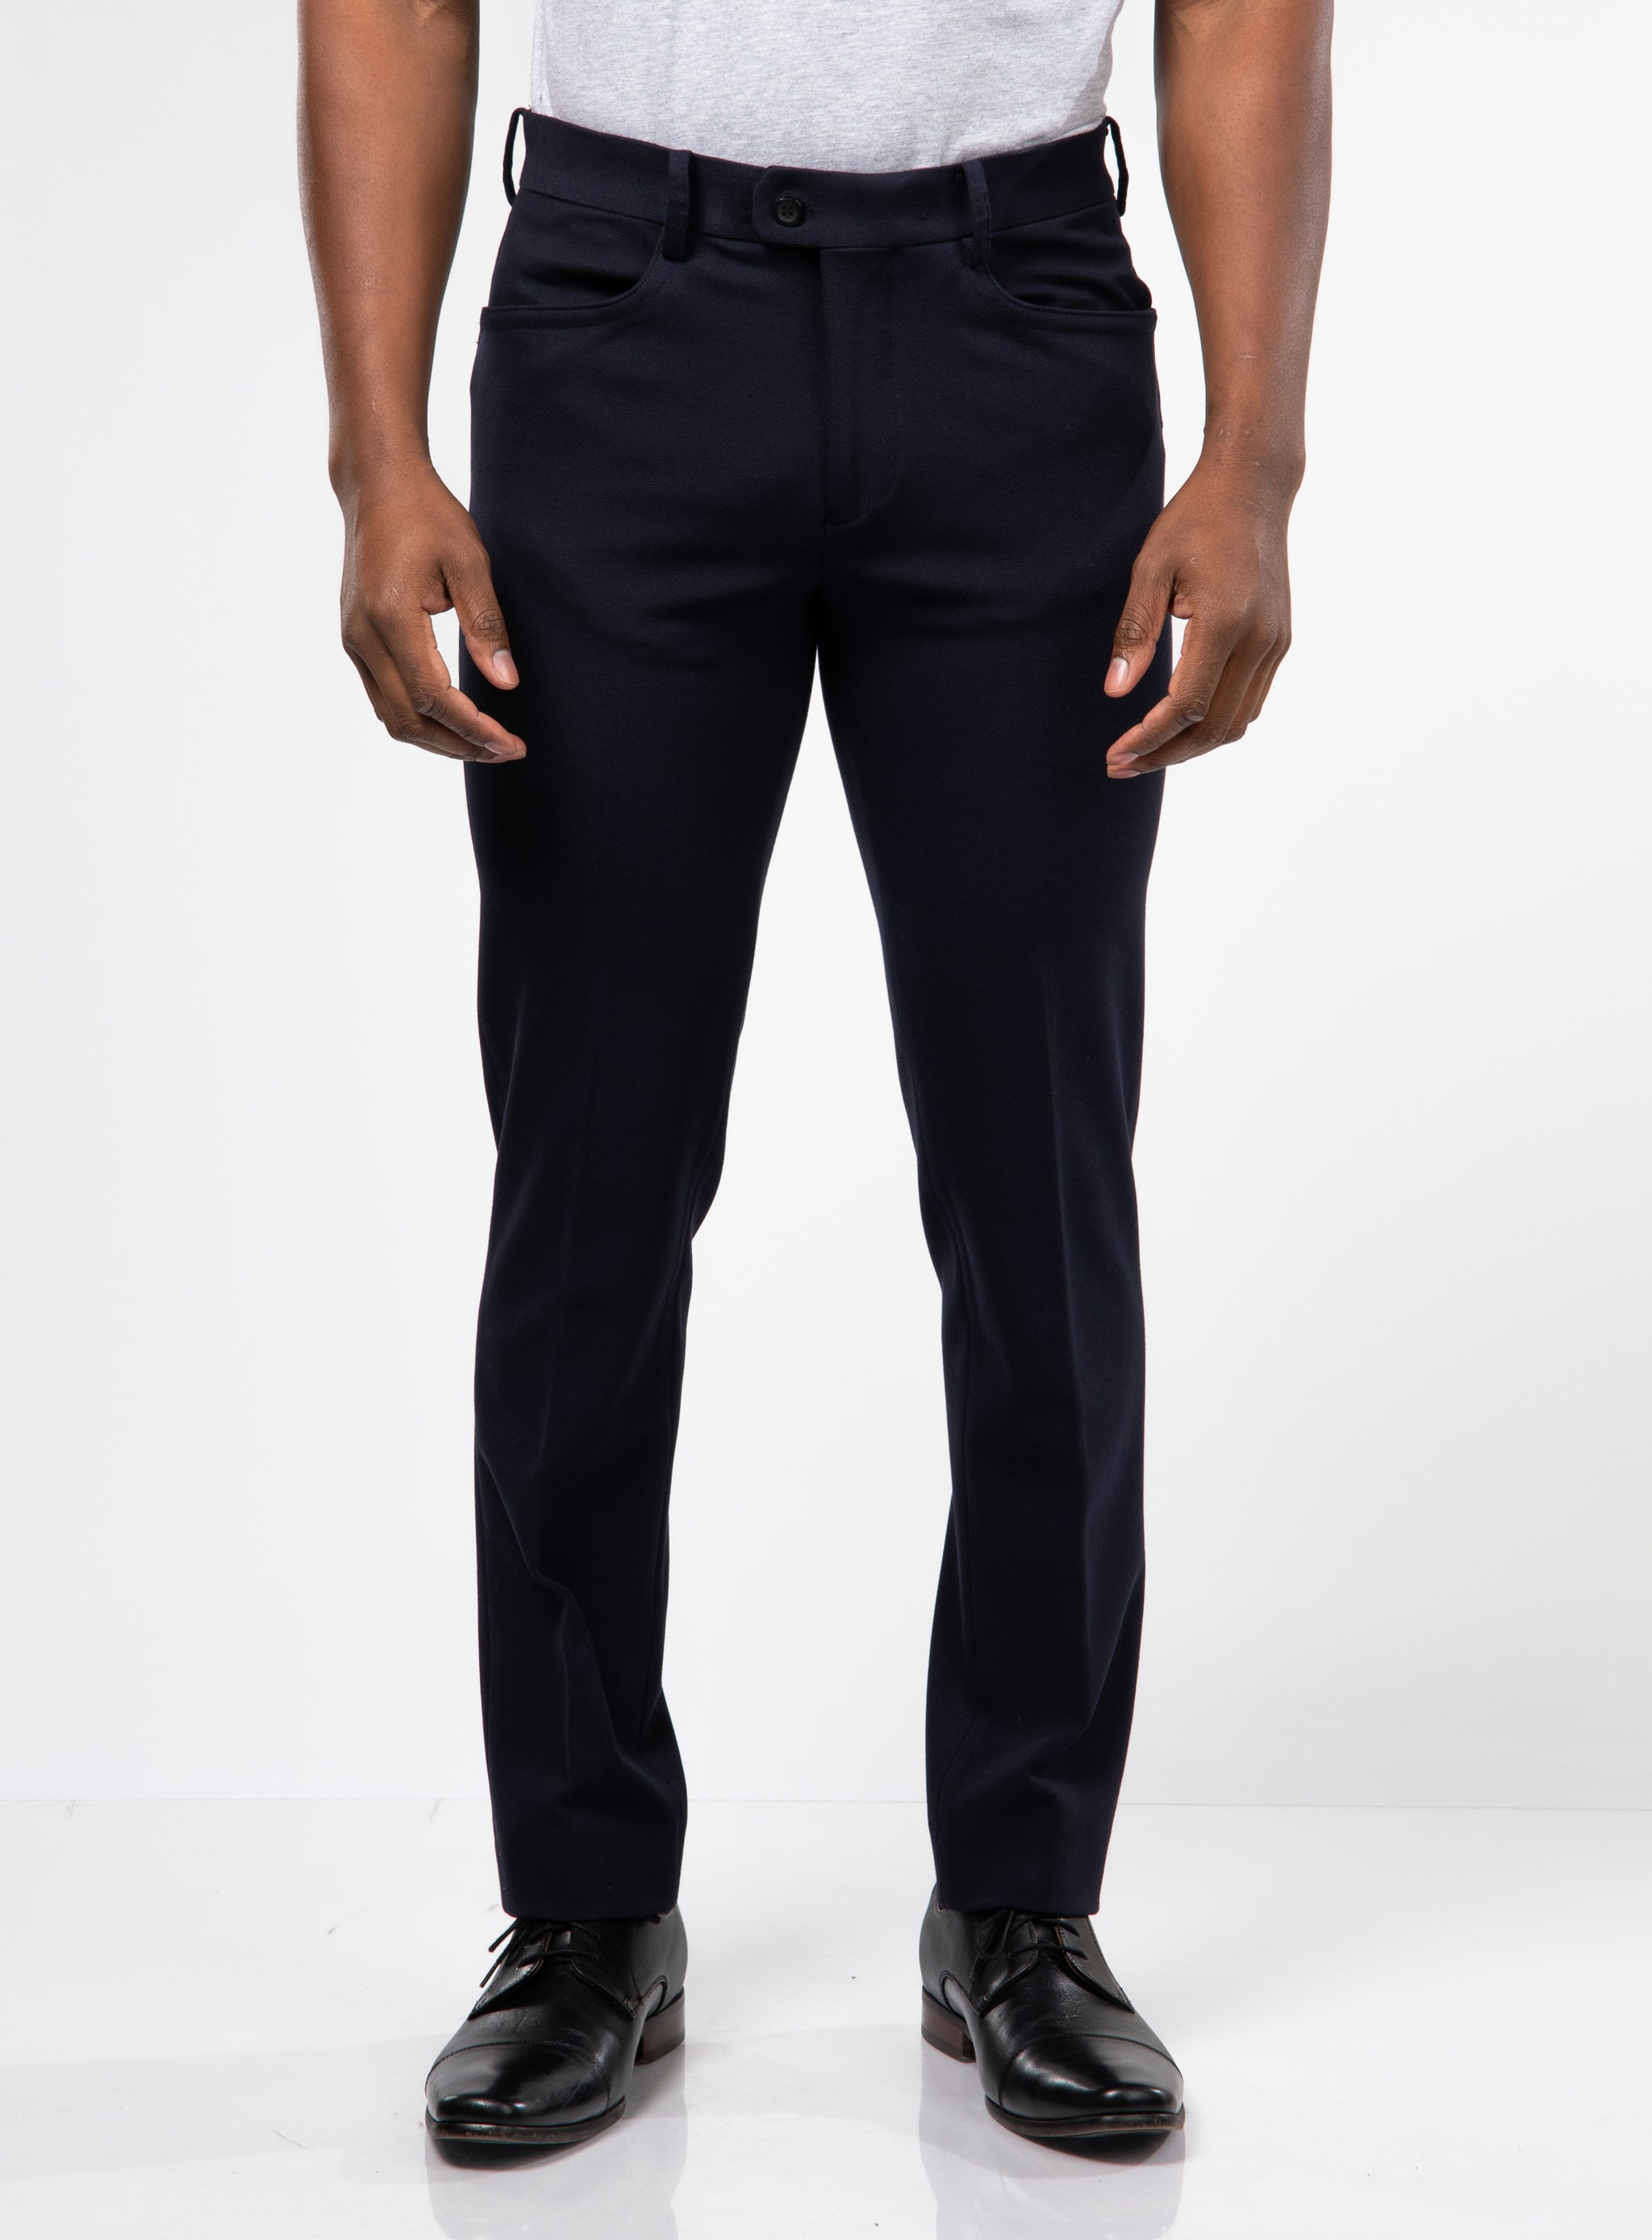 Express Men's Slim Fit Black Workwear Pants 33x30 Straight Leg Cotton 